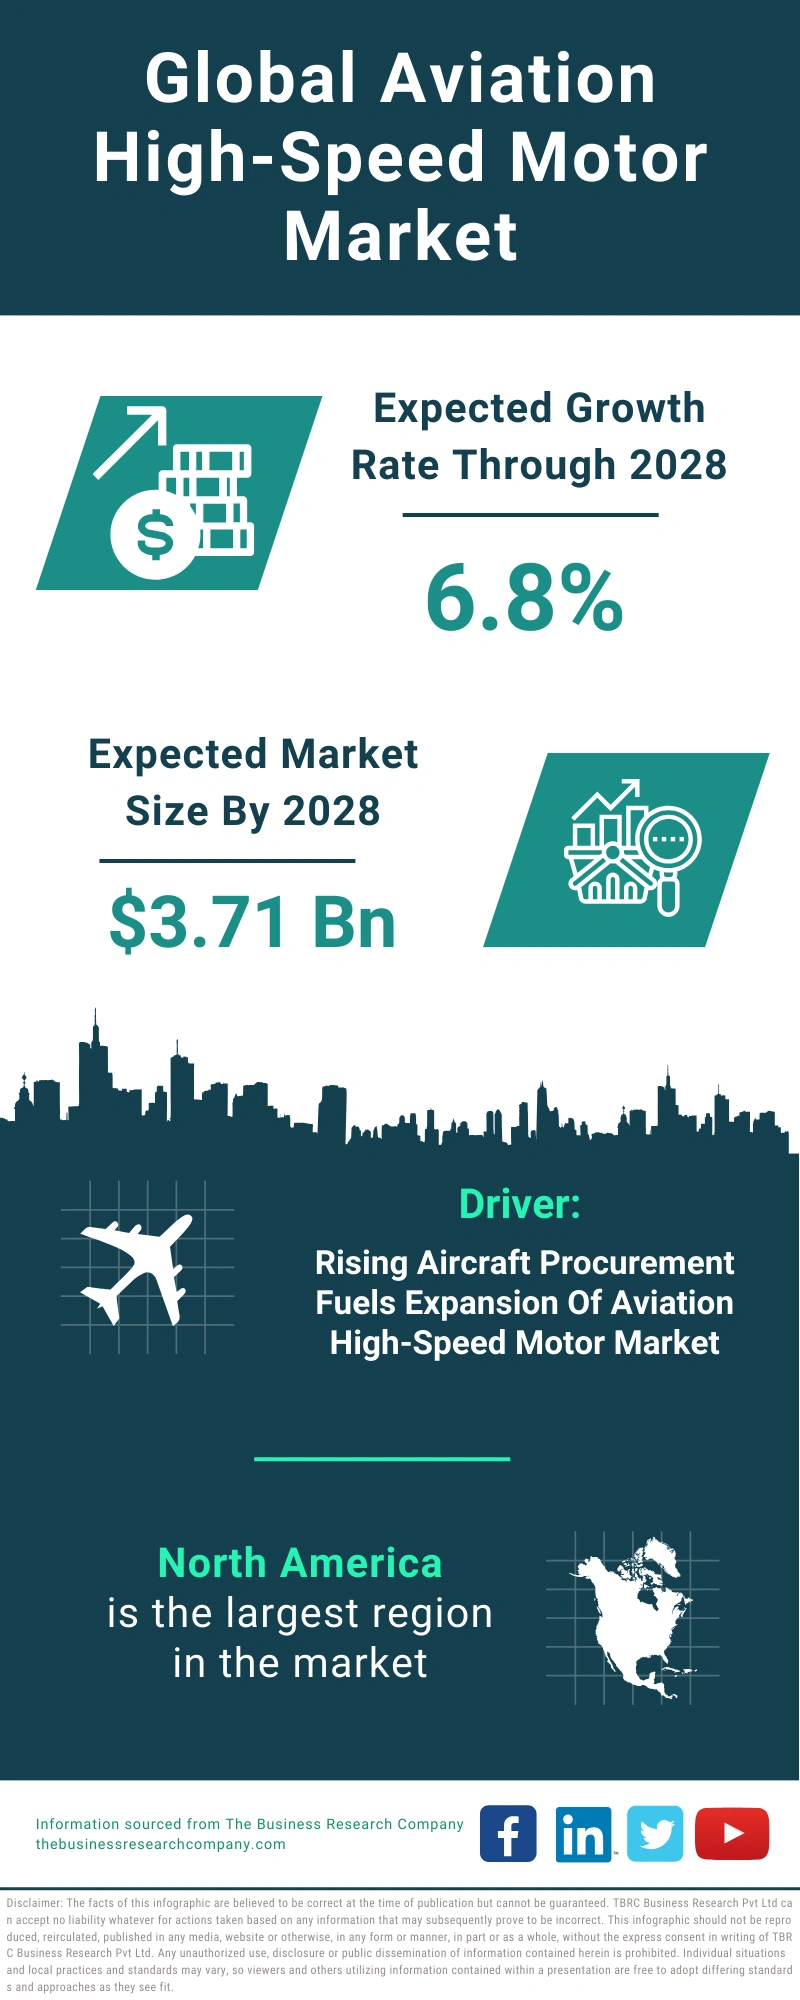 Aviation High-Speed Motor Global Market Report 2024